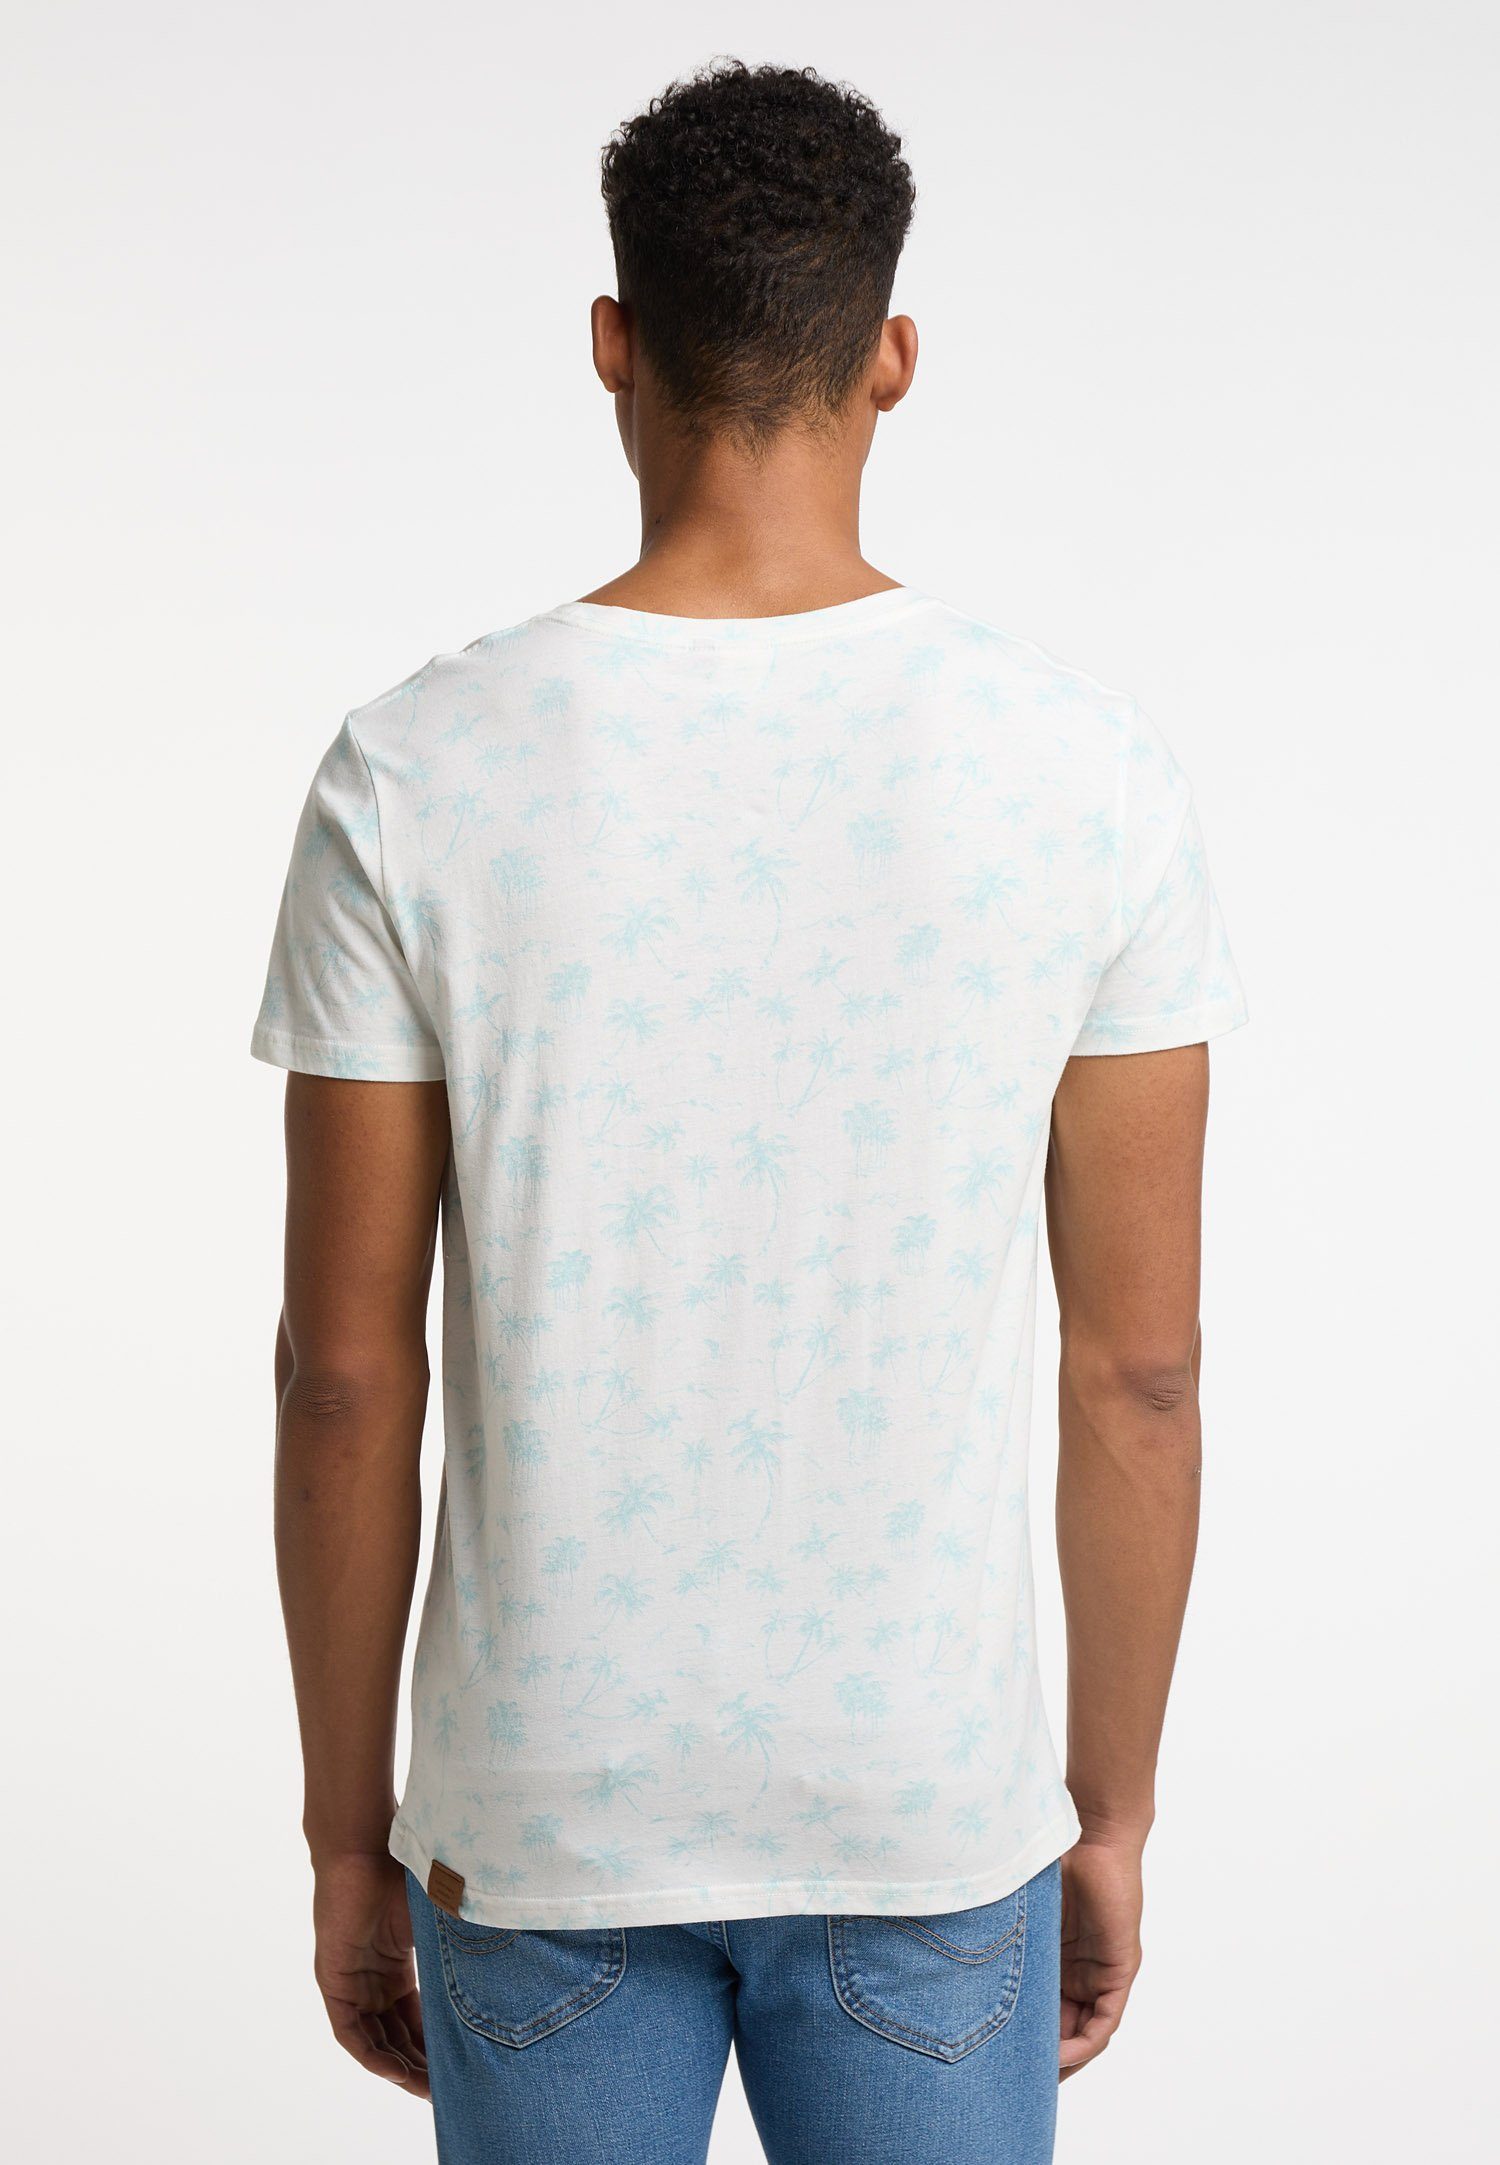 T-Shirt Mode Vegane WHITE & 7000 WANNO Nachhaltige Ragwear